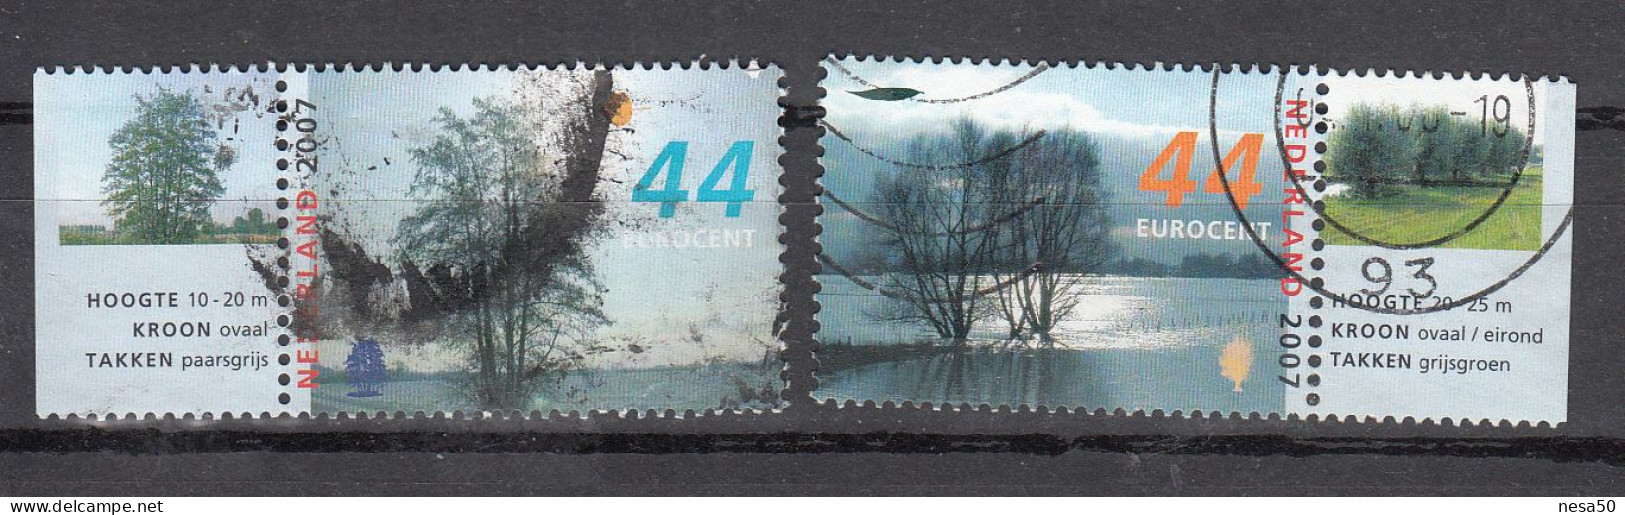 Nederland 2007 Nvph Nr 2528 + 2529 , Mi Nr 2529 + 2530 , Bomen In De Winter , Els + Wilg - Used Stamps